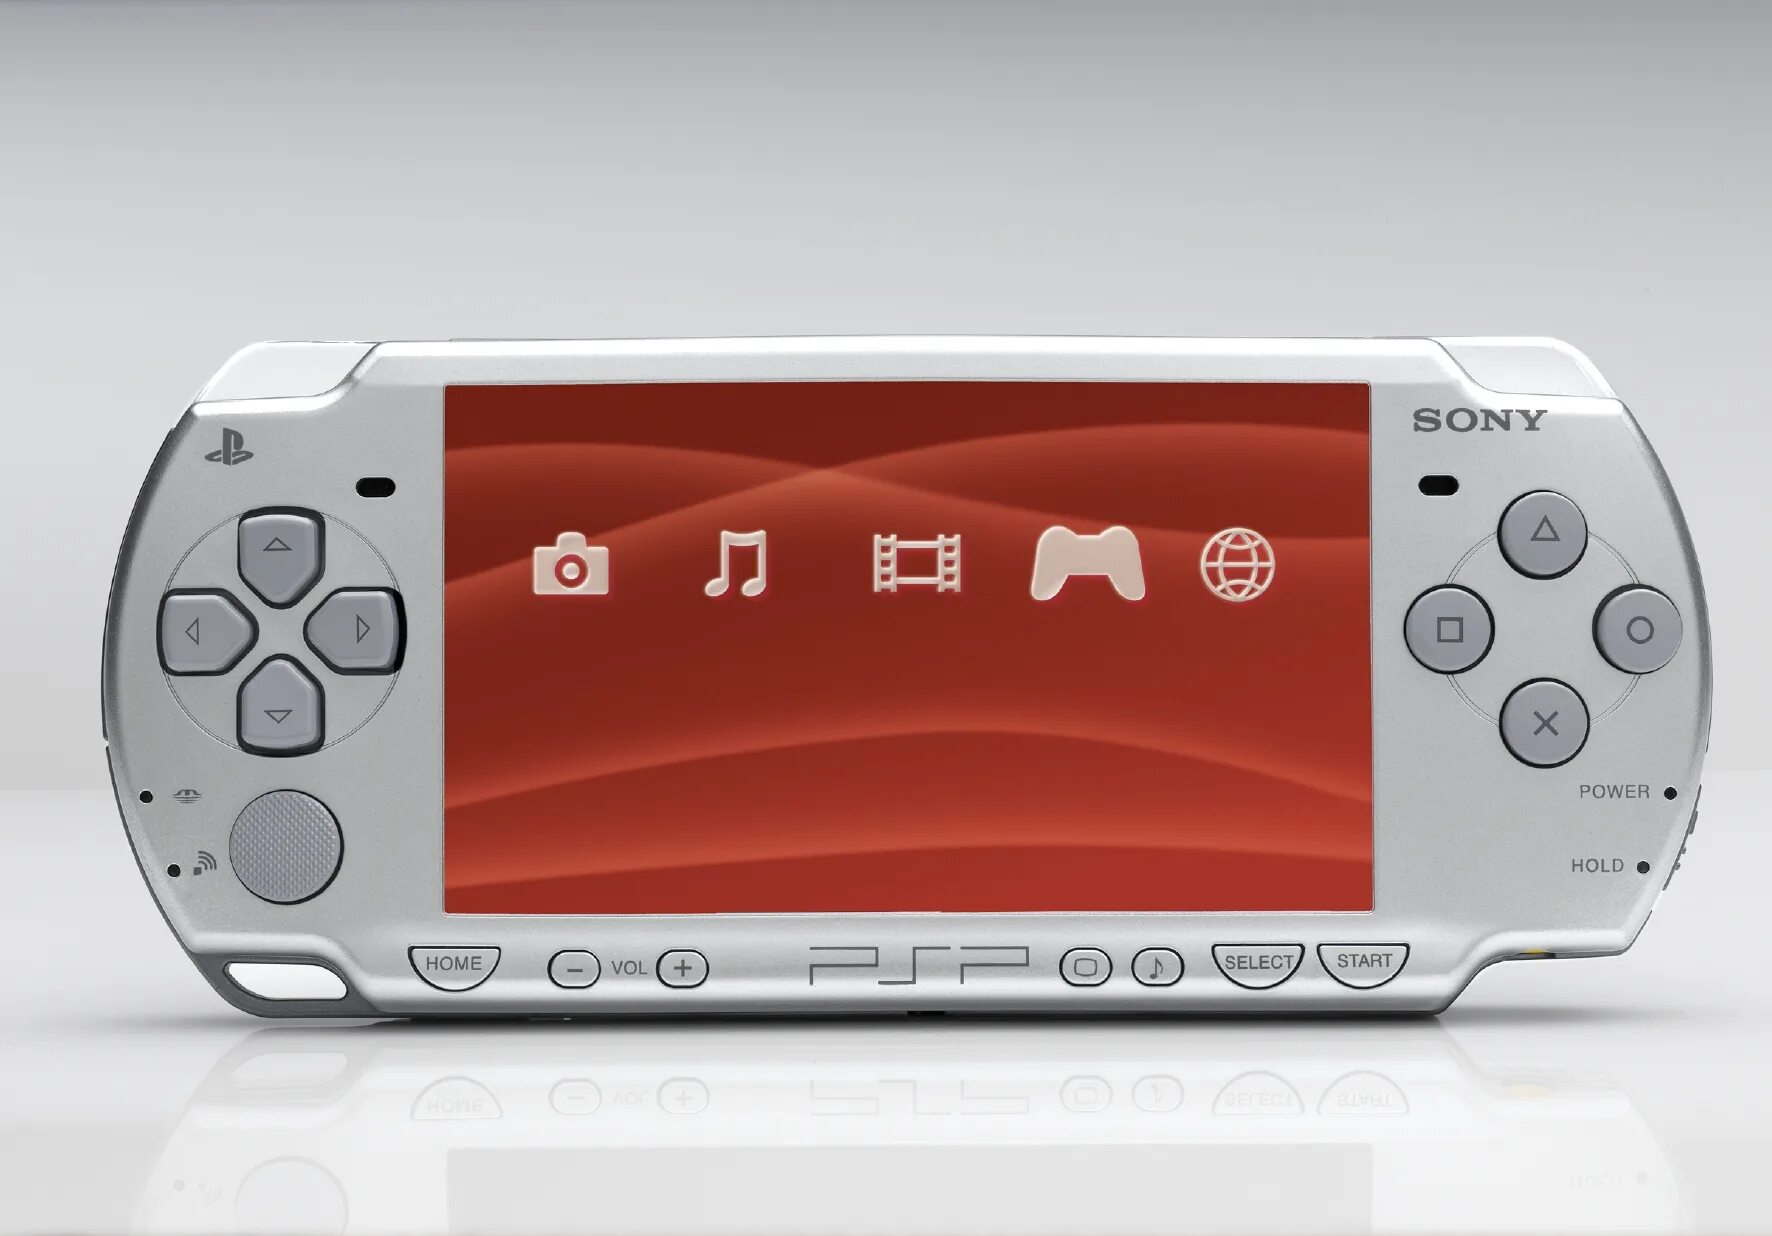 Sony PLAYSTATION Portable Slim & Lite PSP-3000. Sony PSP 3008 Slim. PSP 3008 Silver. Sony PLAYSTATION Portable 2000.